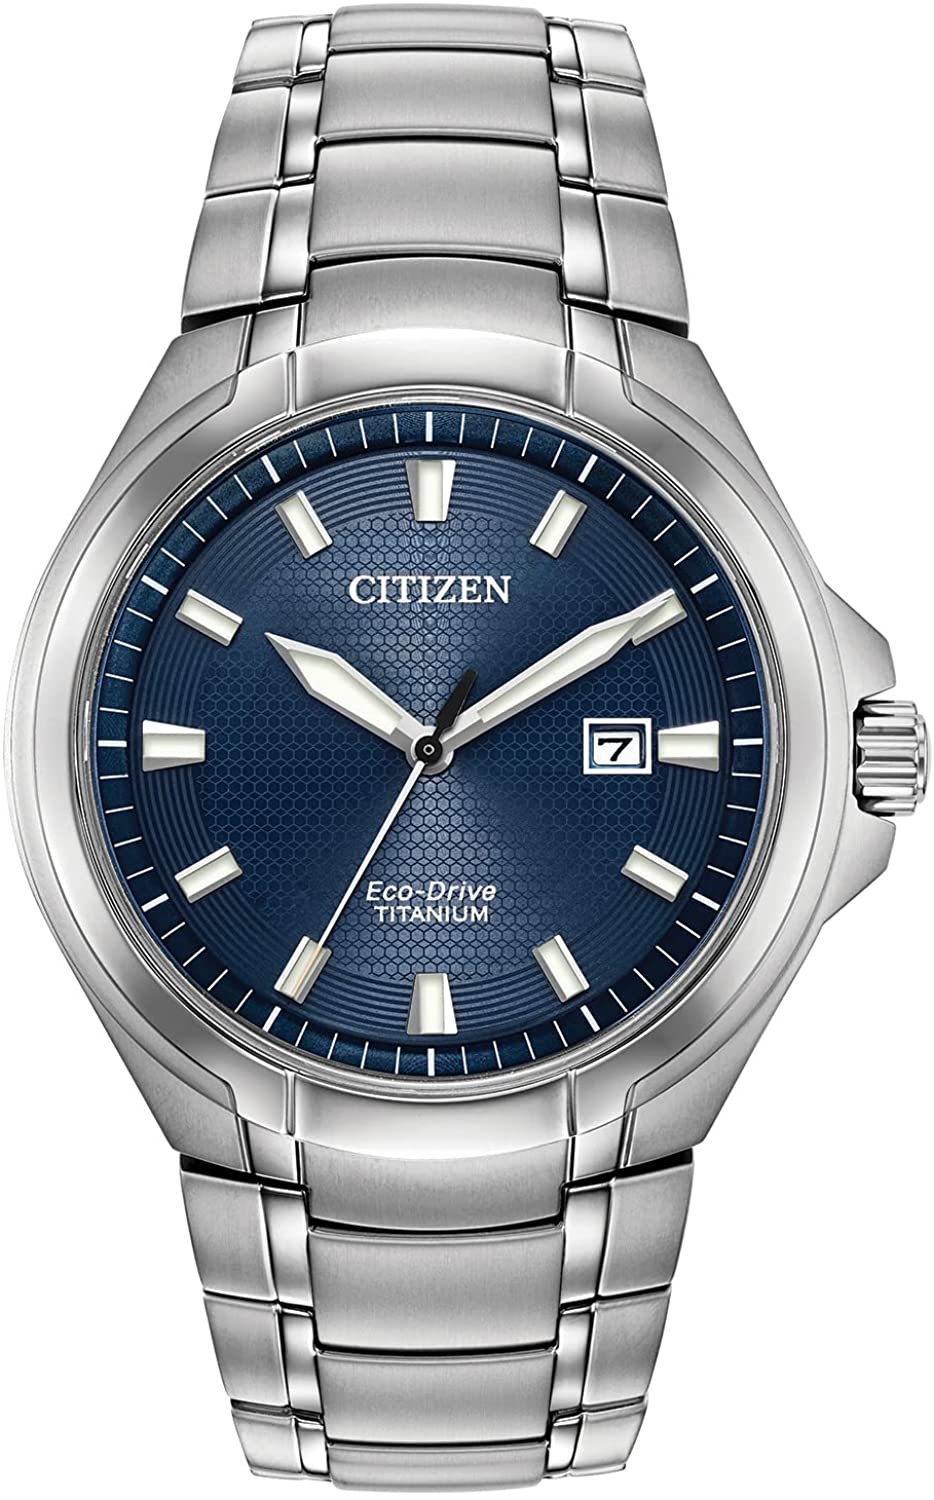 Citizen Eco-Drive Paradigm Men's Titanium Watch w/ Sapphire Crystal $161 + free s/h at Amazon